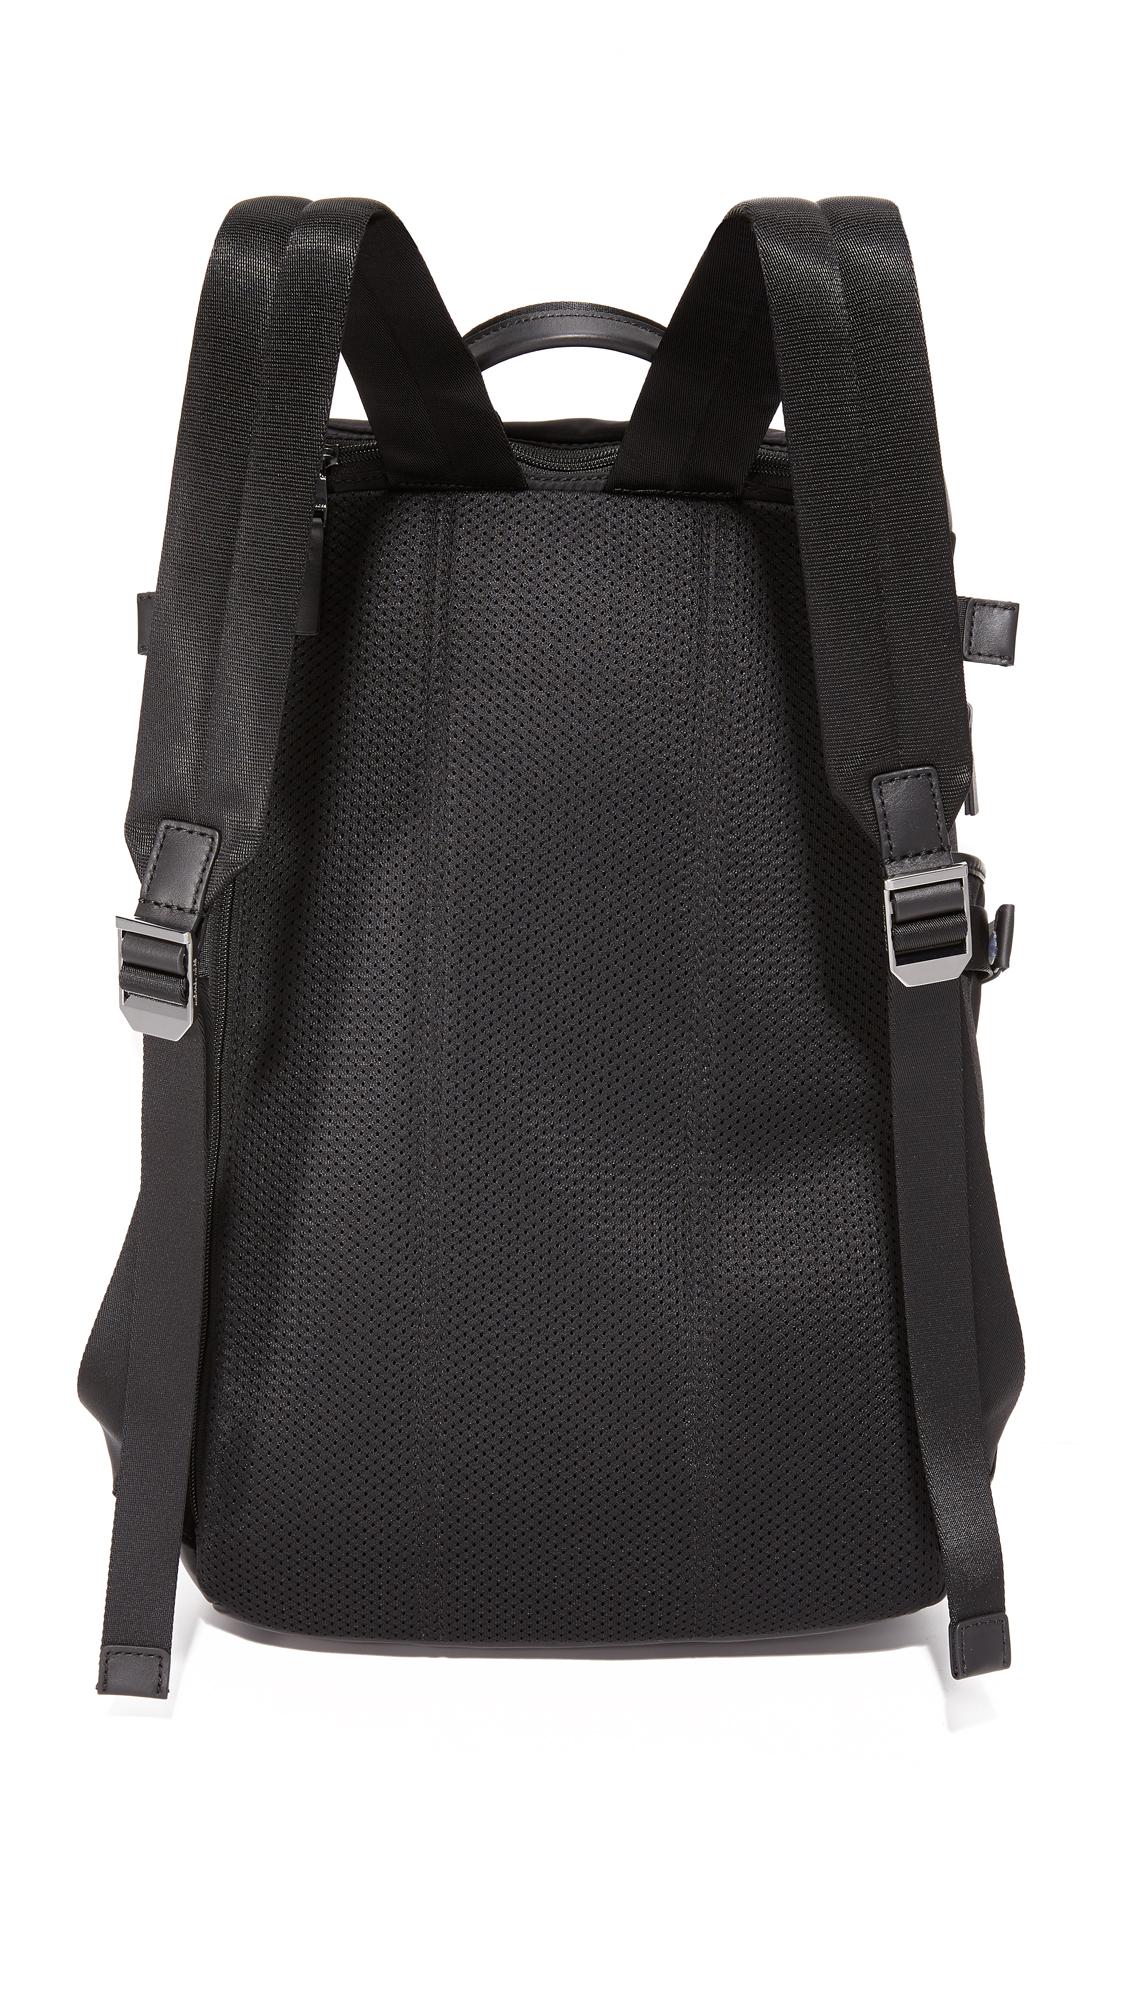 Lyst - Michael Kors Kent Nylon Cycling Backpack in Black for Men